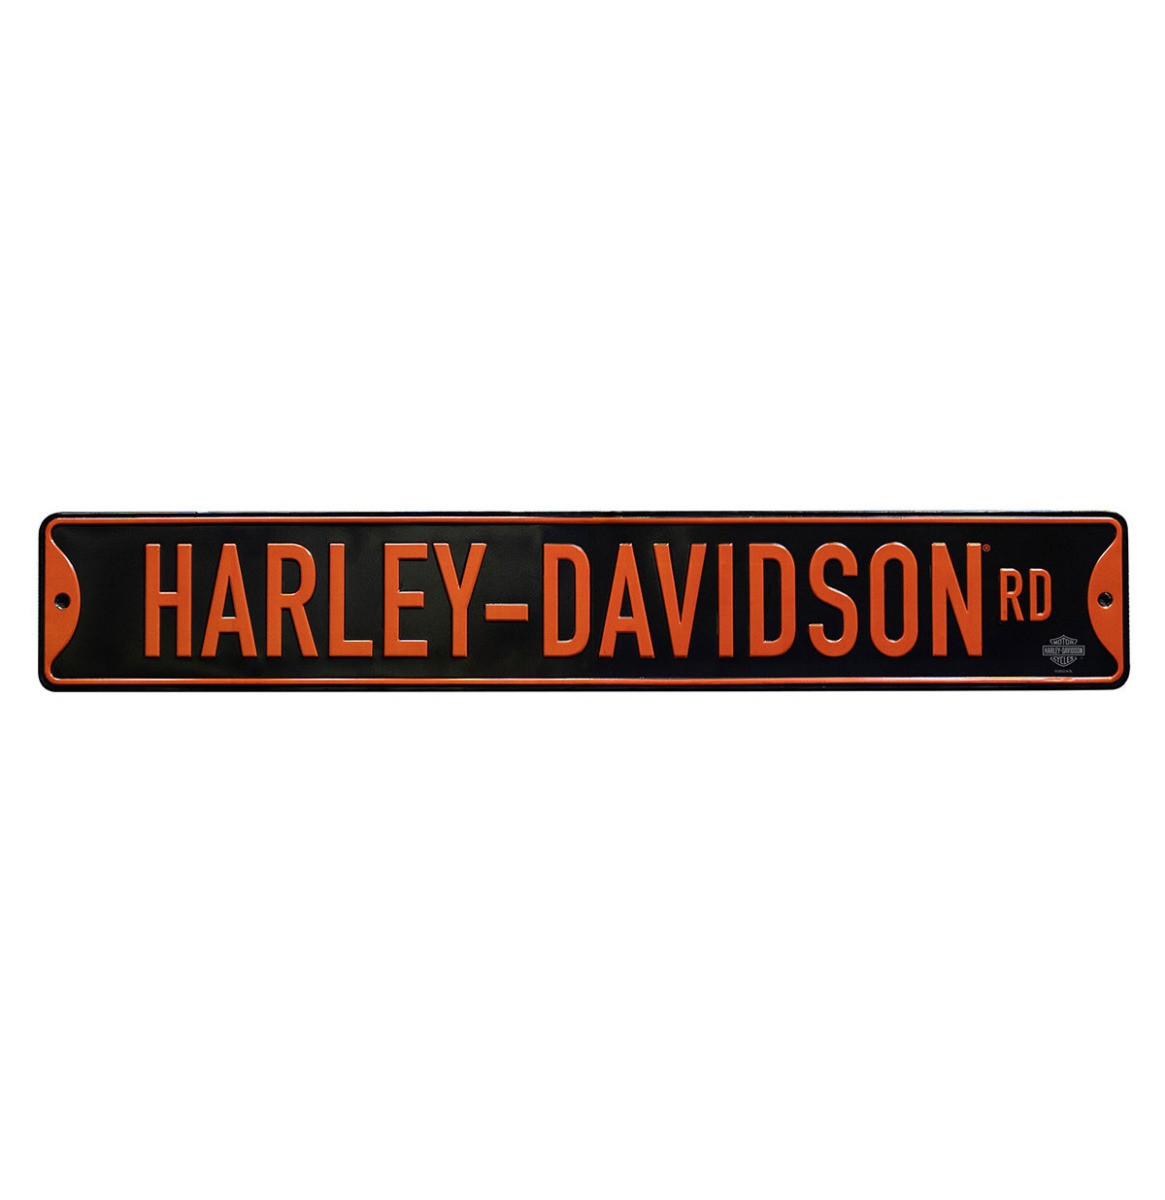 Harley-Davidson Road Metalen Straat Bord